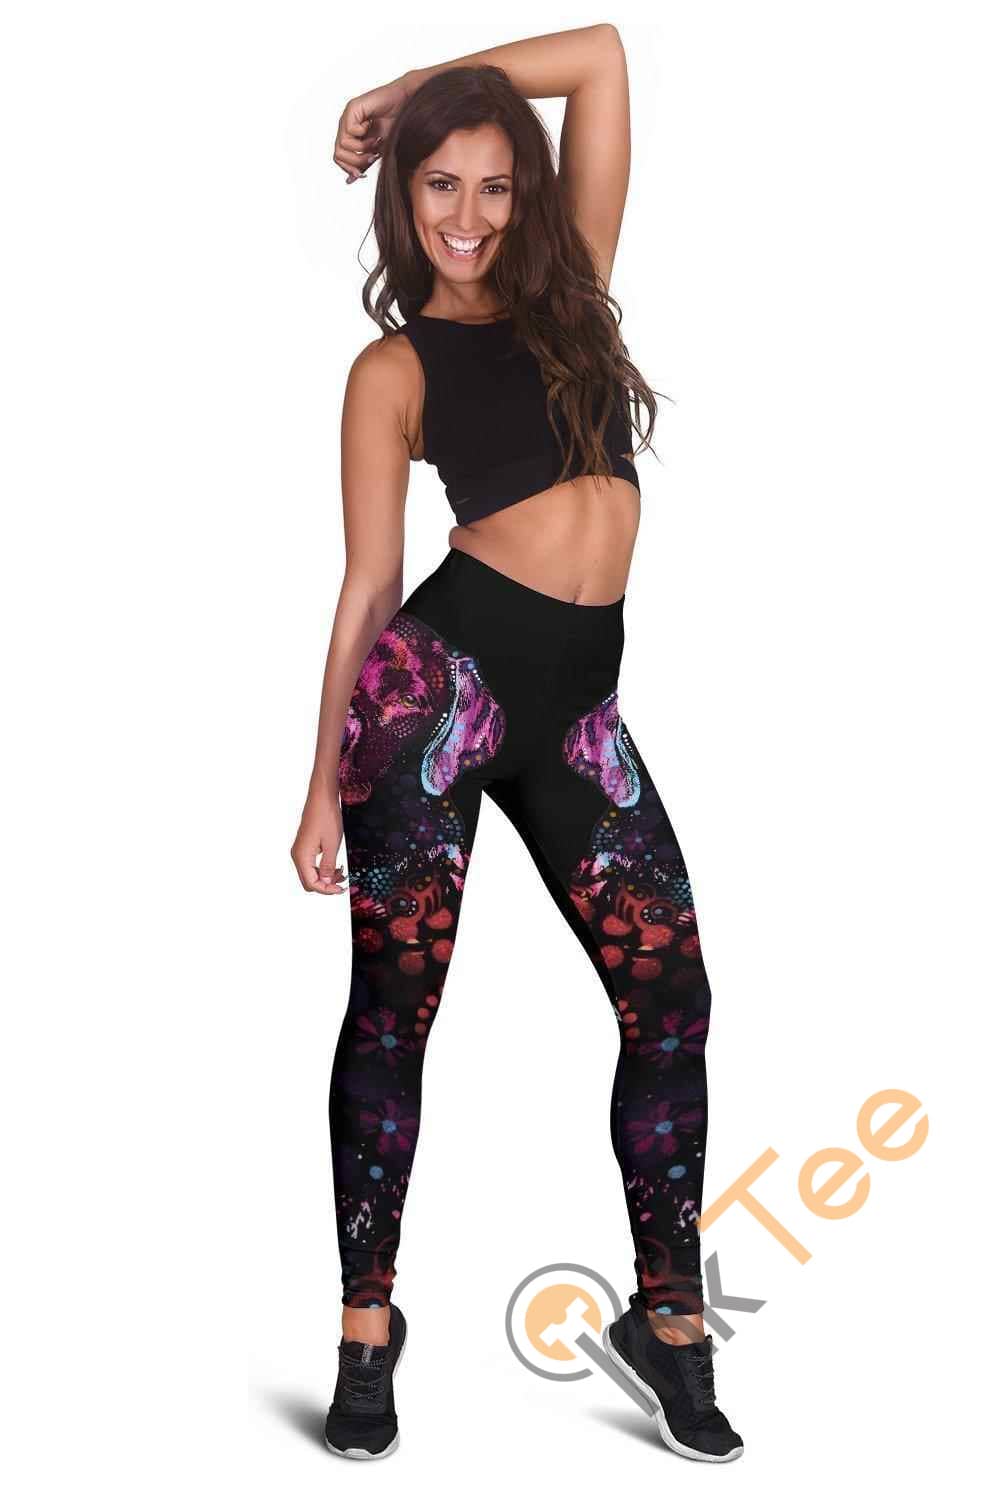 Inktee Store - Labrador 3D All Over Print For Yoga Fitness Women'S Leggings Image